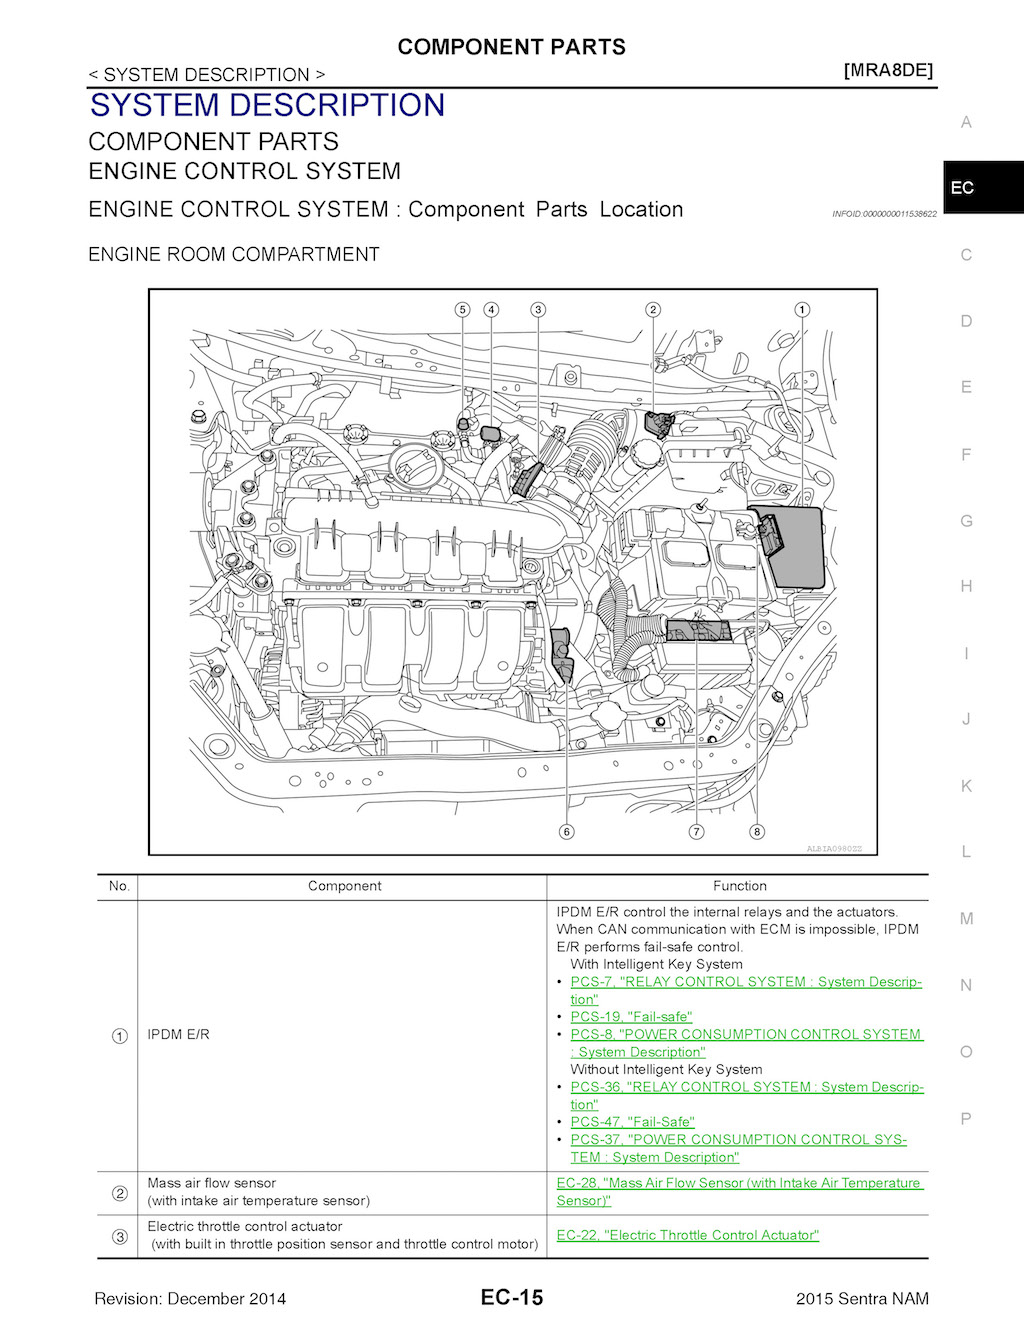 2015 Nissan Sentra Repair Manual, System Description